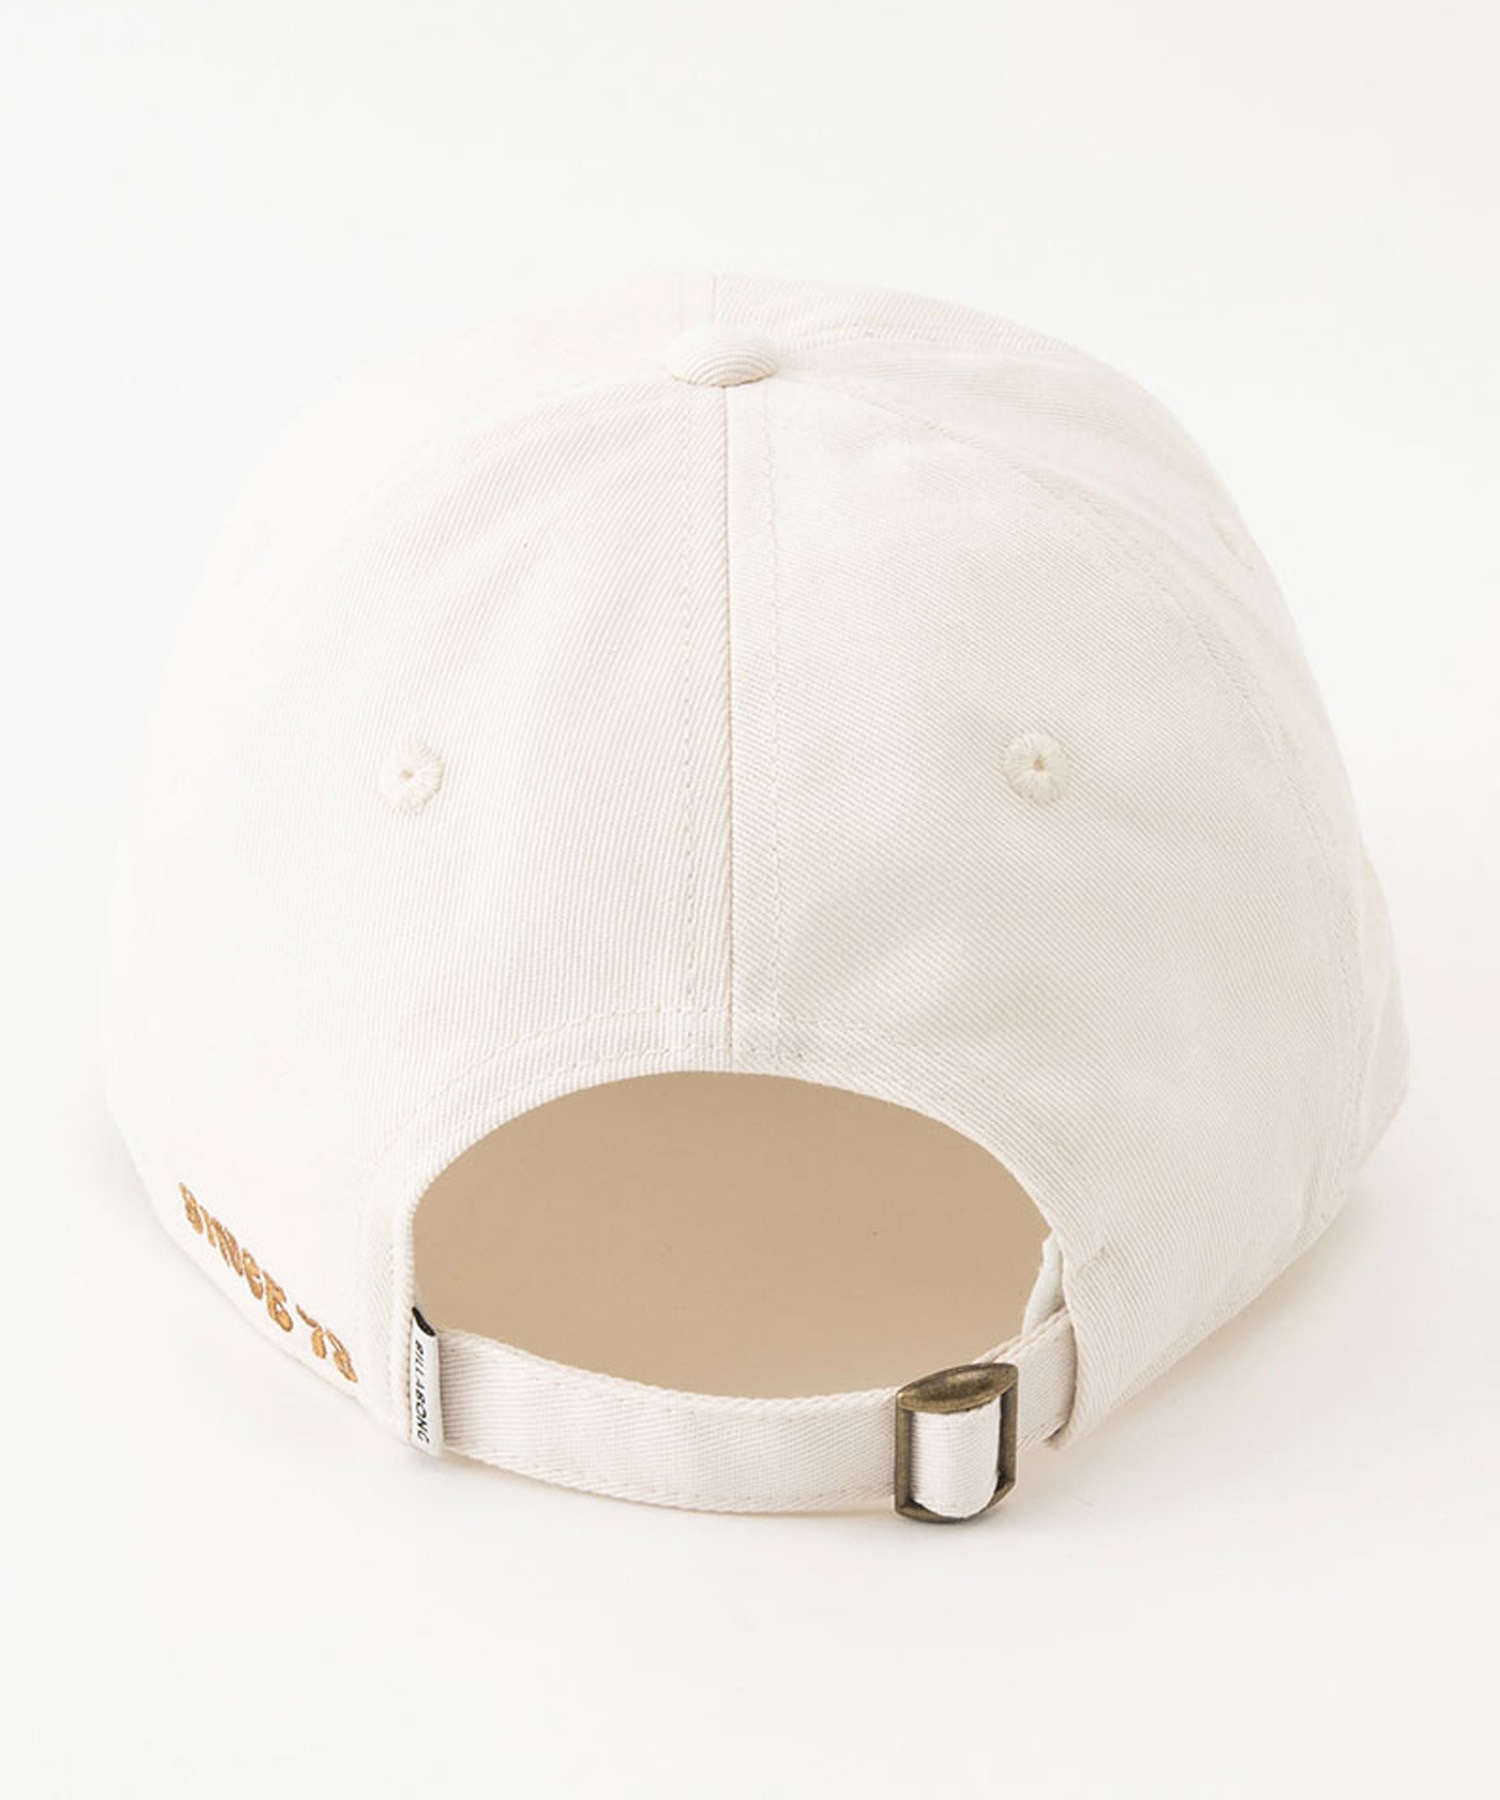 BILLABONG/ビラボン ARCH LOGO CAP キャップ 帽子 フリーサイズ BE013-911(BLK-FREE)